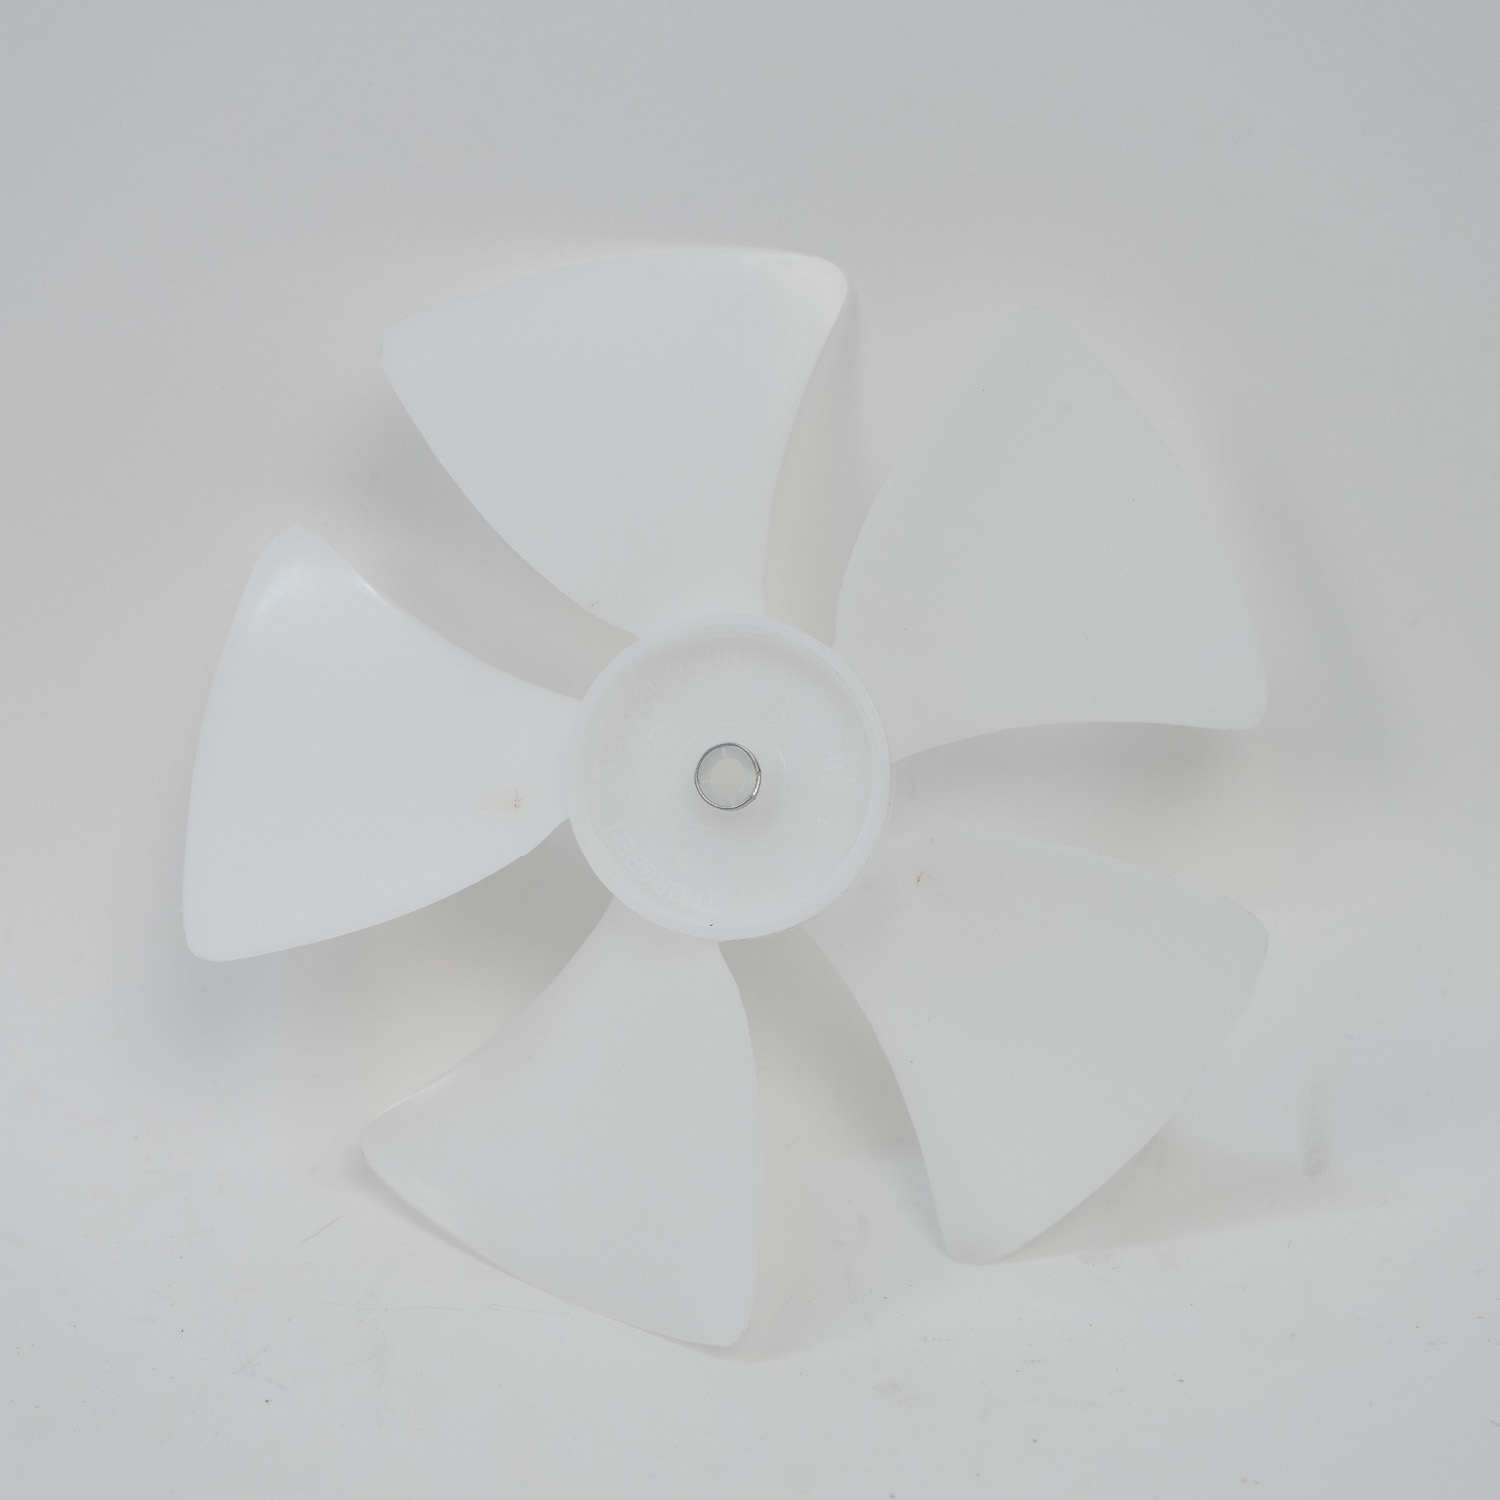 Plastic Fan Blade 7" Diameter CW Rotation 5 Blade